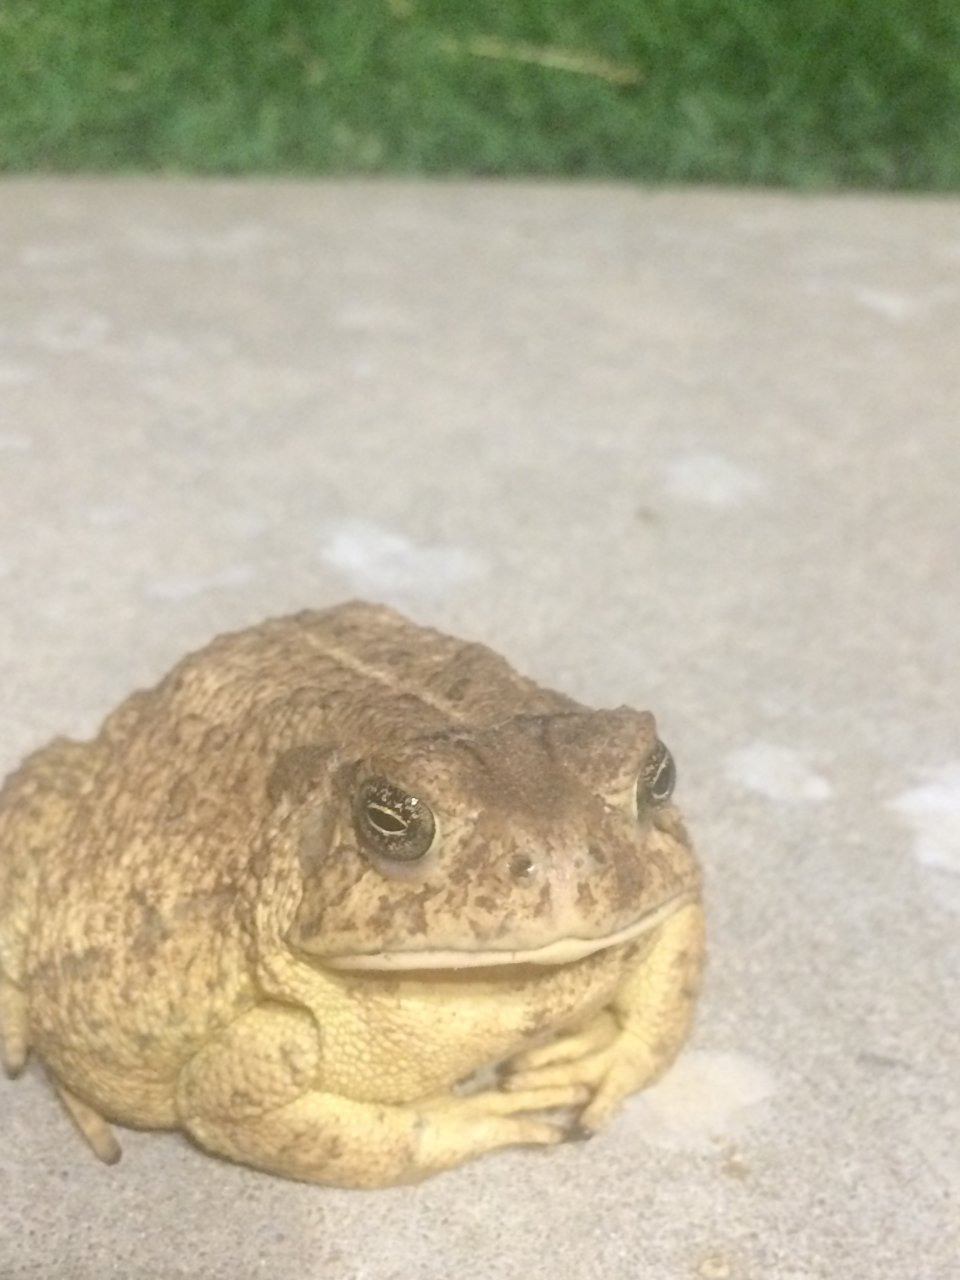 Big ol' Toad 3